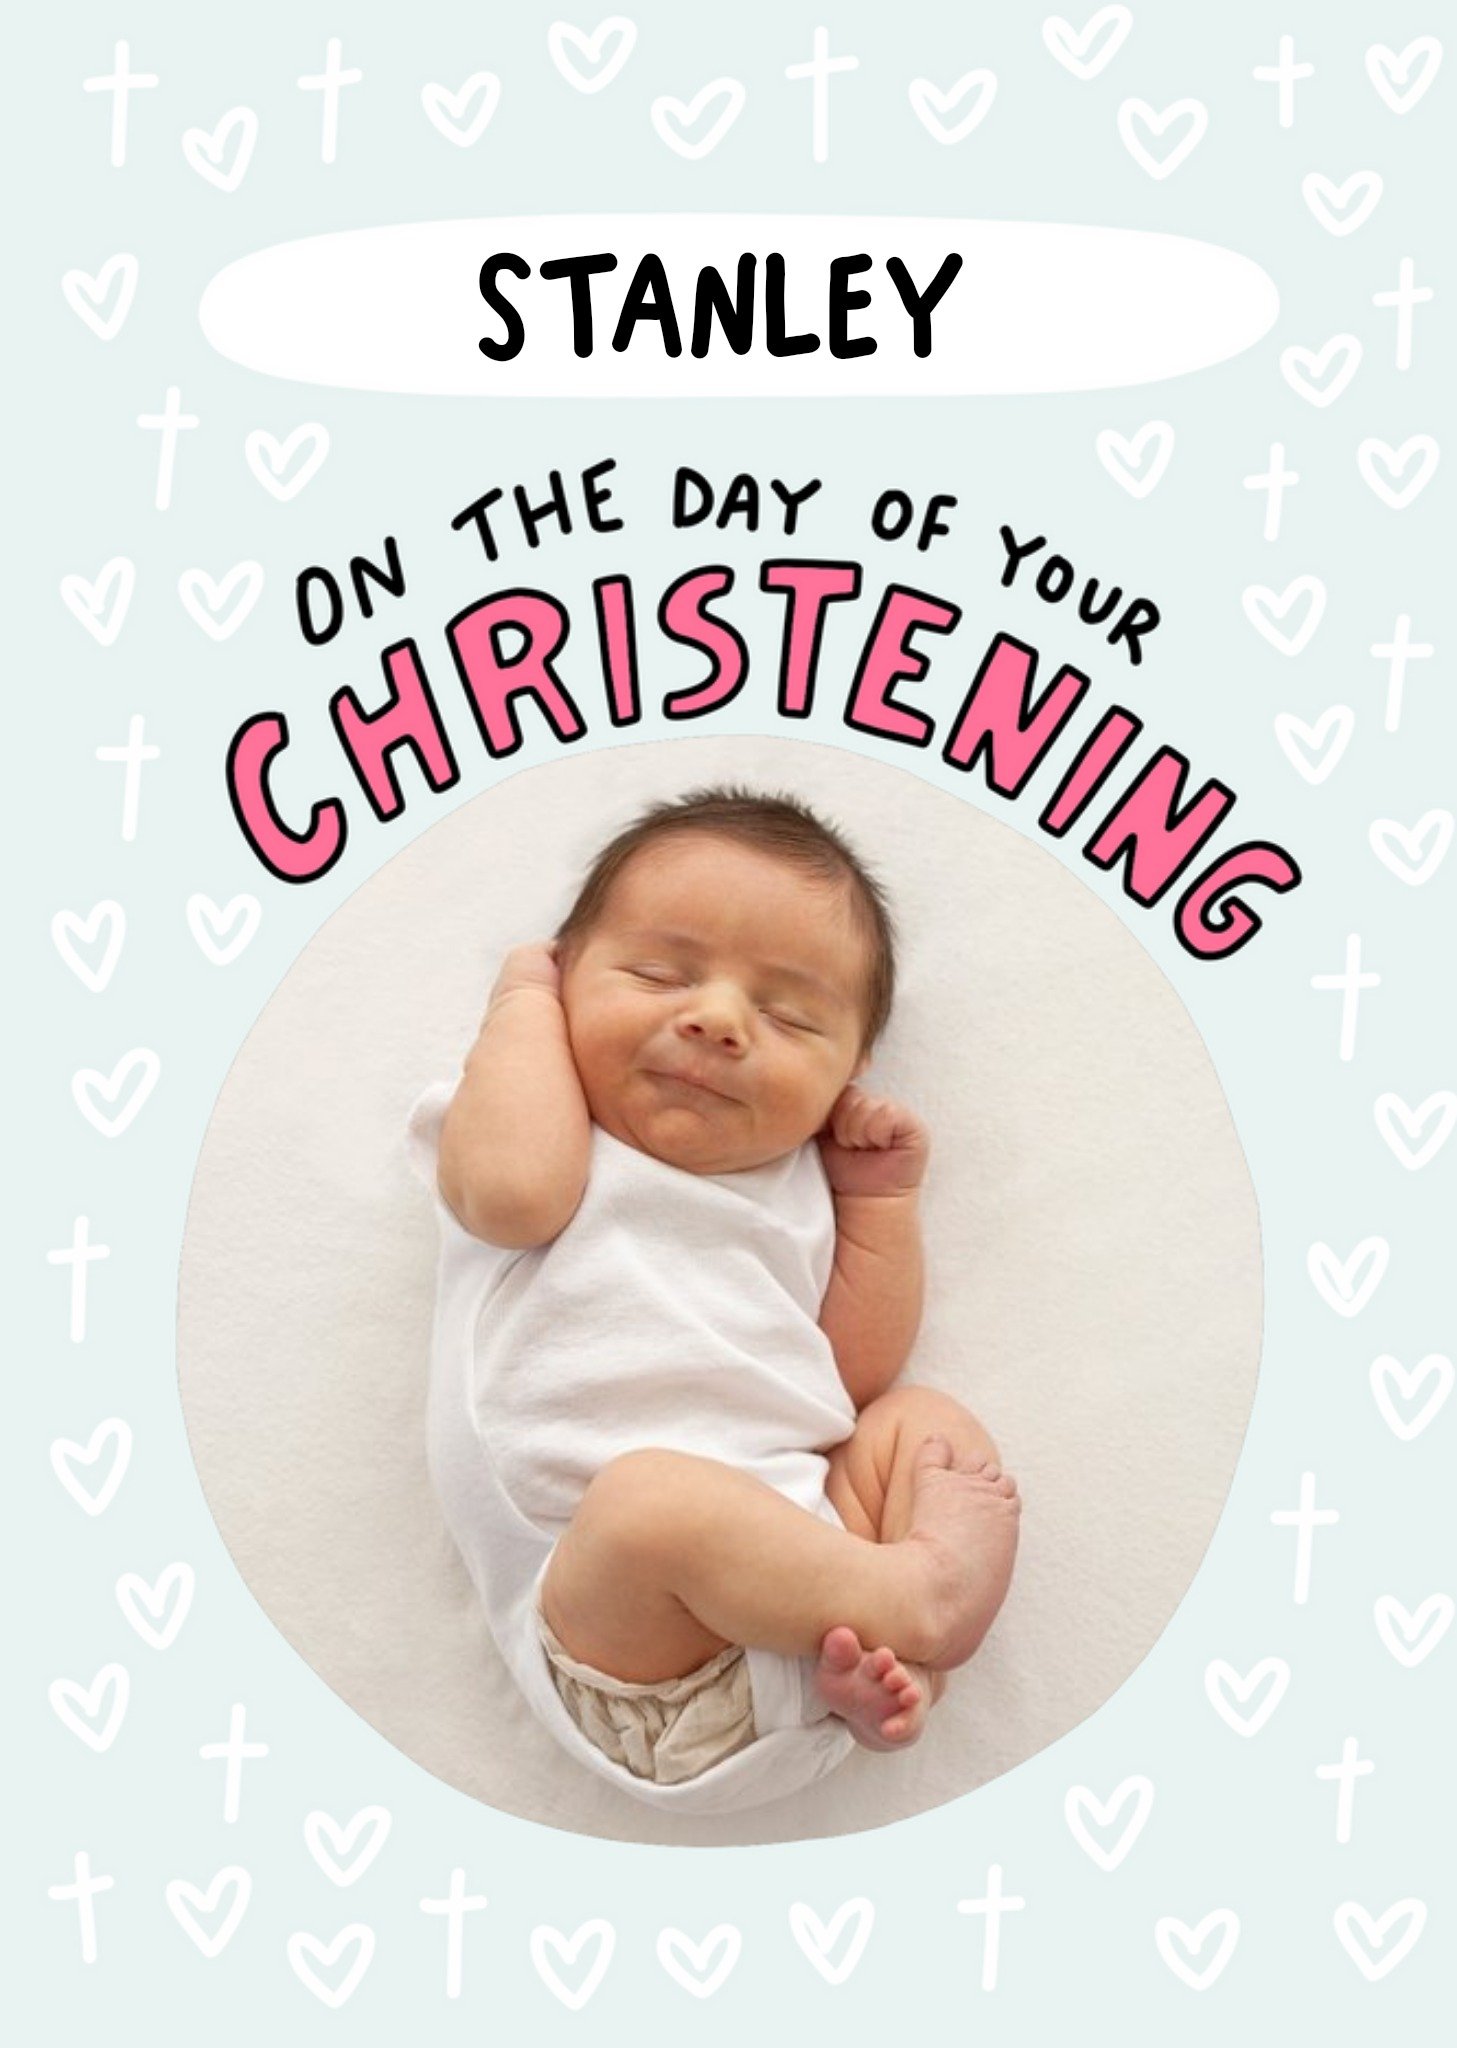 Love Hearts Angela Chick Photo Upload Cute Christening Card Ecard